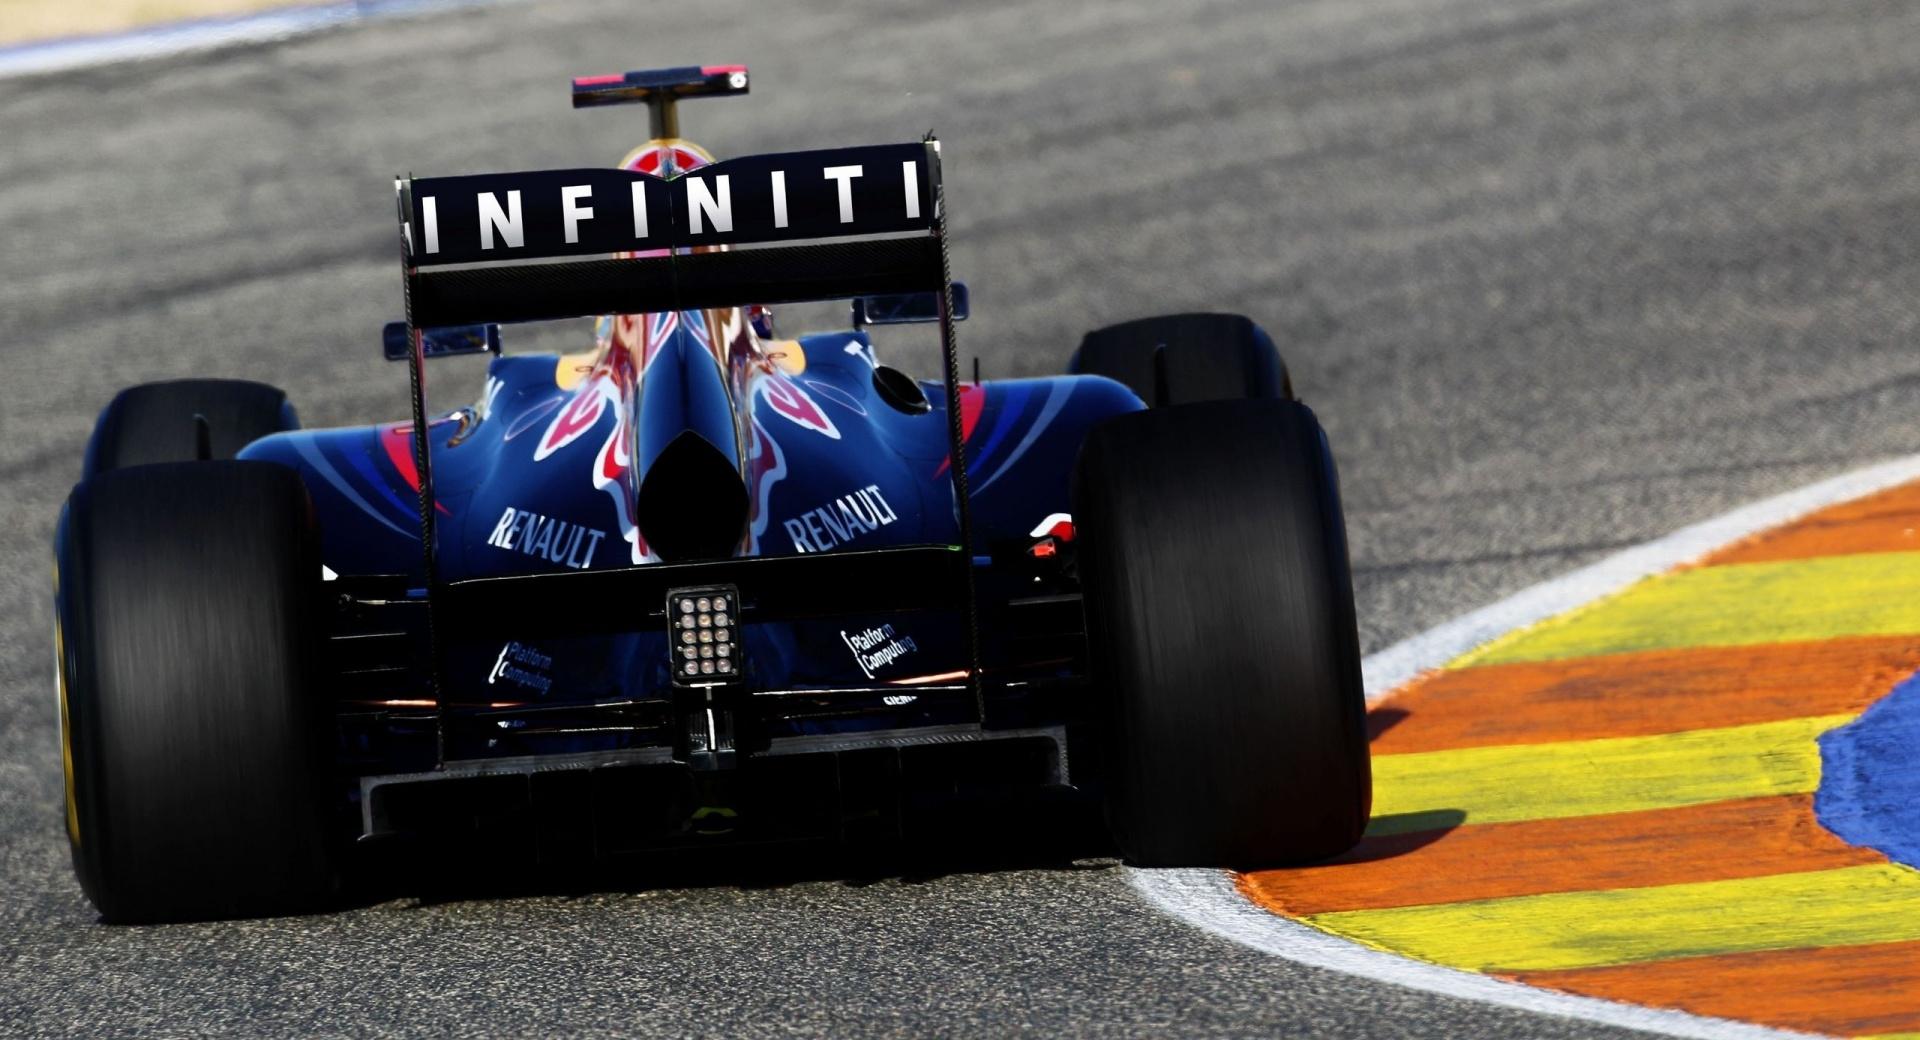 Infiniti Formula 1 wallpapers HD quality